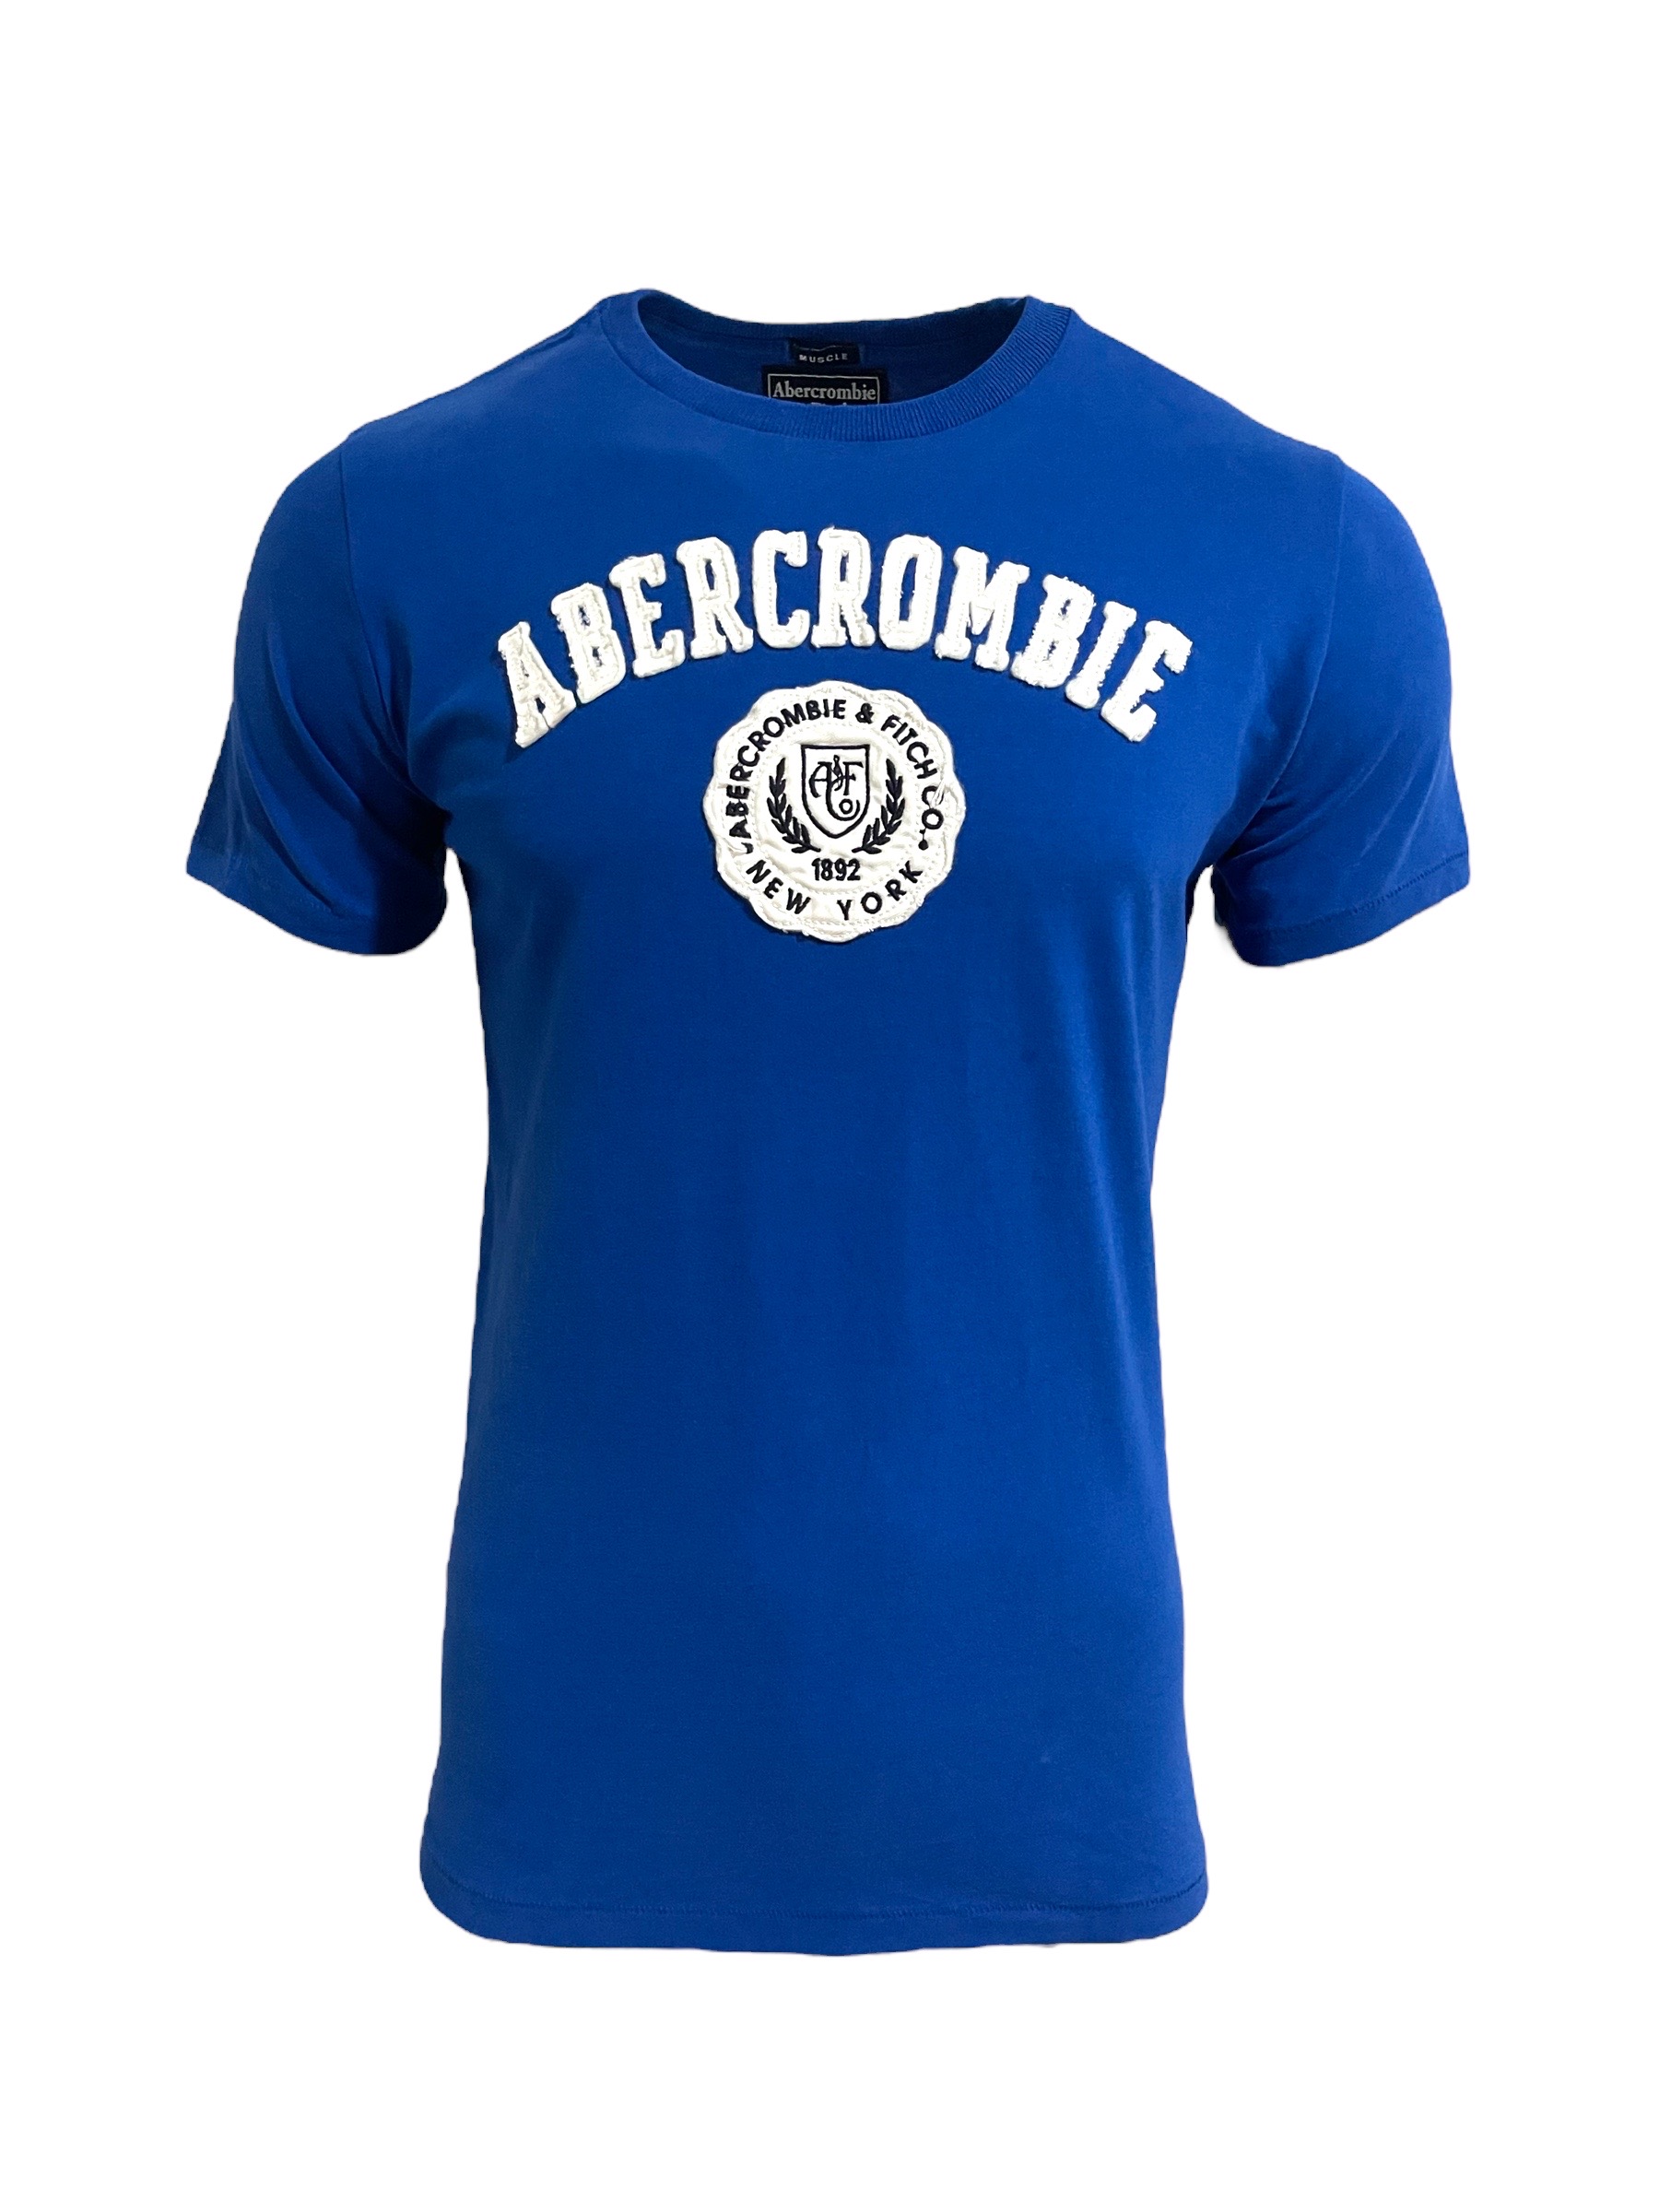 Camiseta Abercrombie Masculina New York Azul - Gareth | Store Men